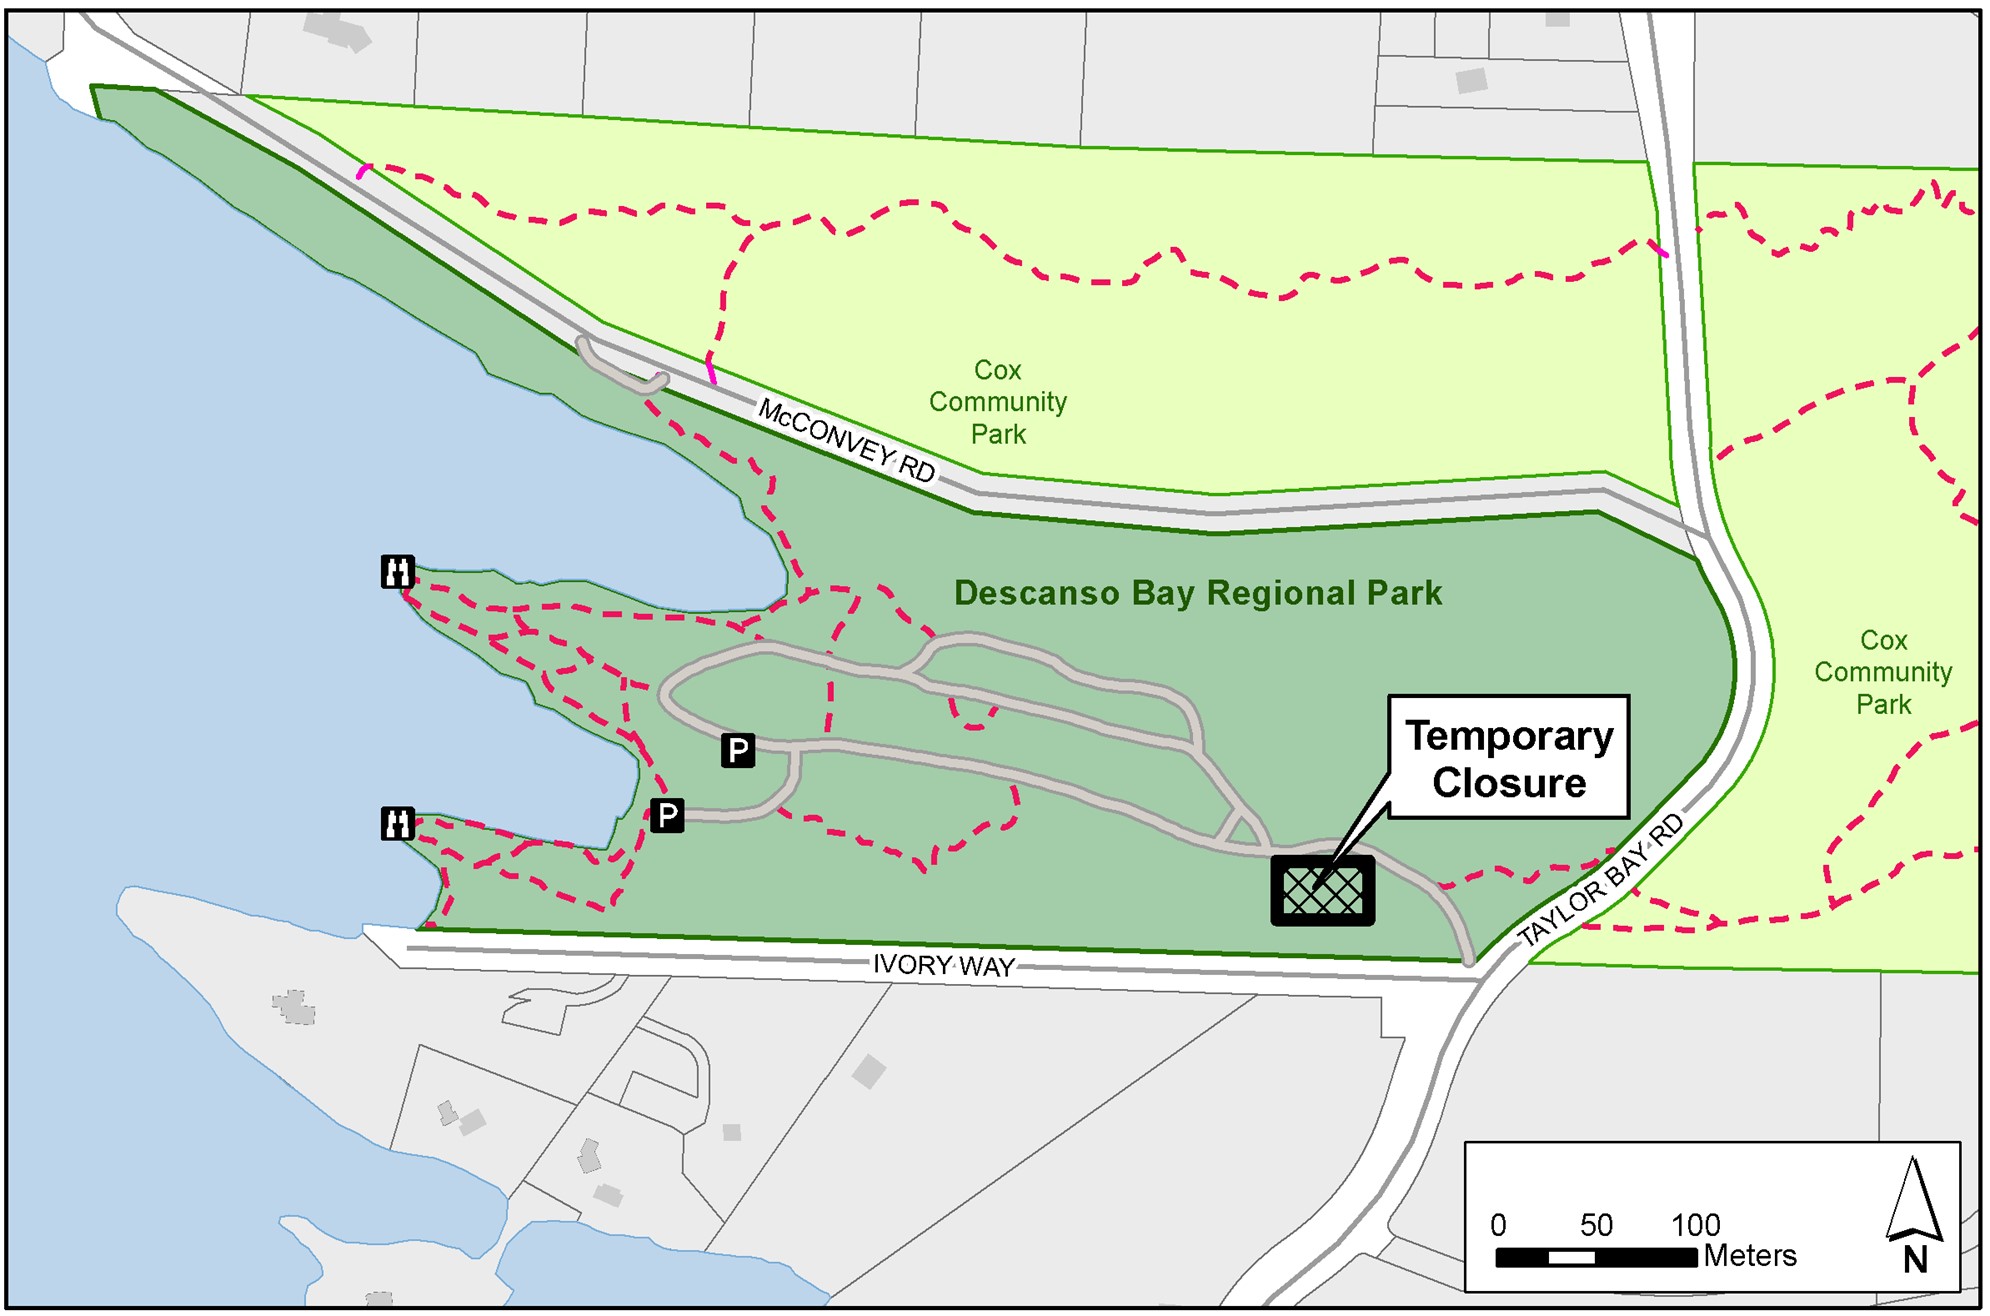 Descanso Bay Regional Park closure image